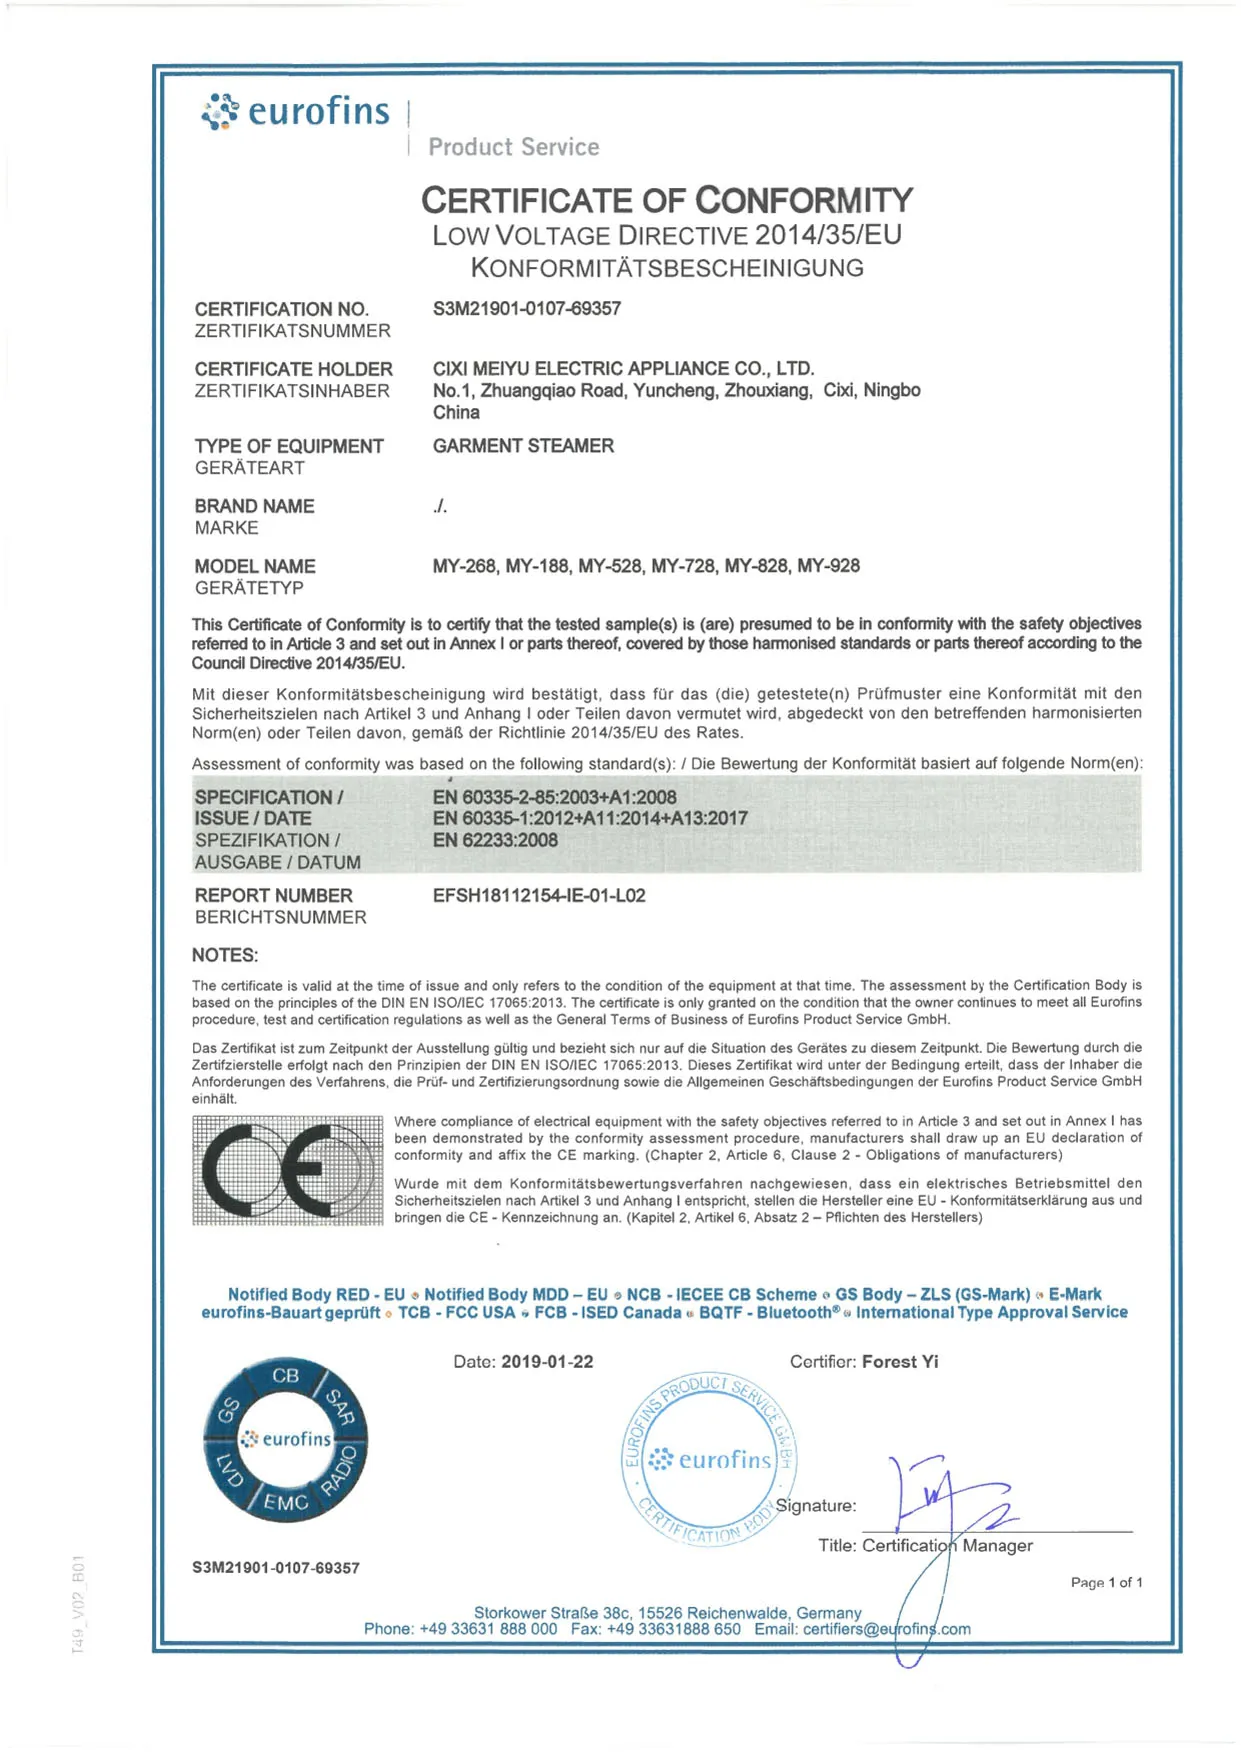 LVD certifikat S3M21901-0107-69357_LVD CoC